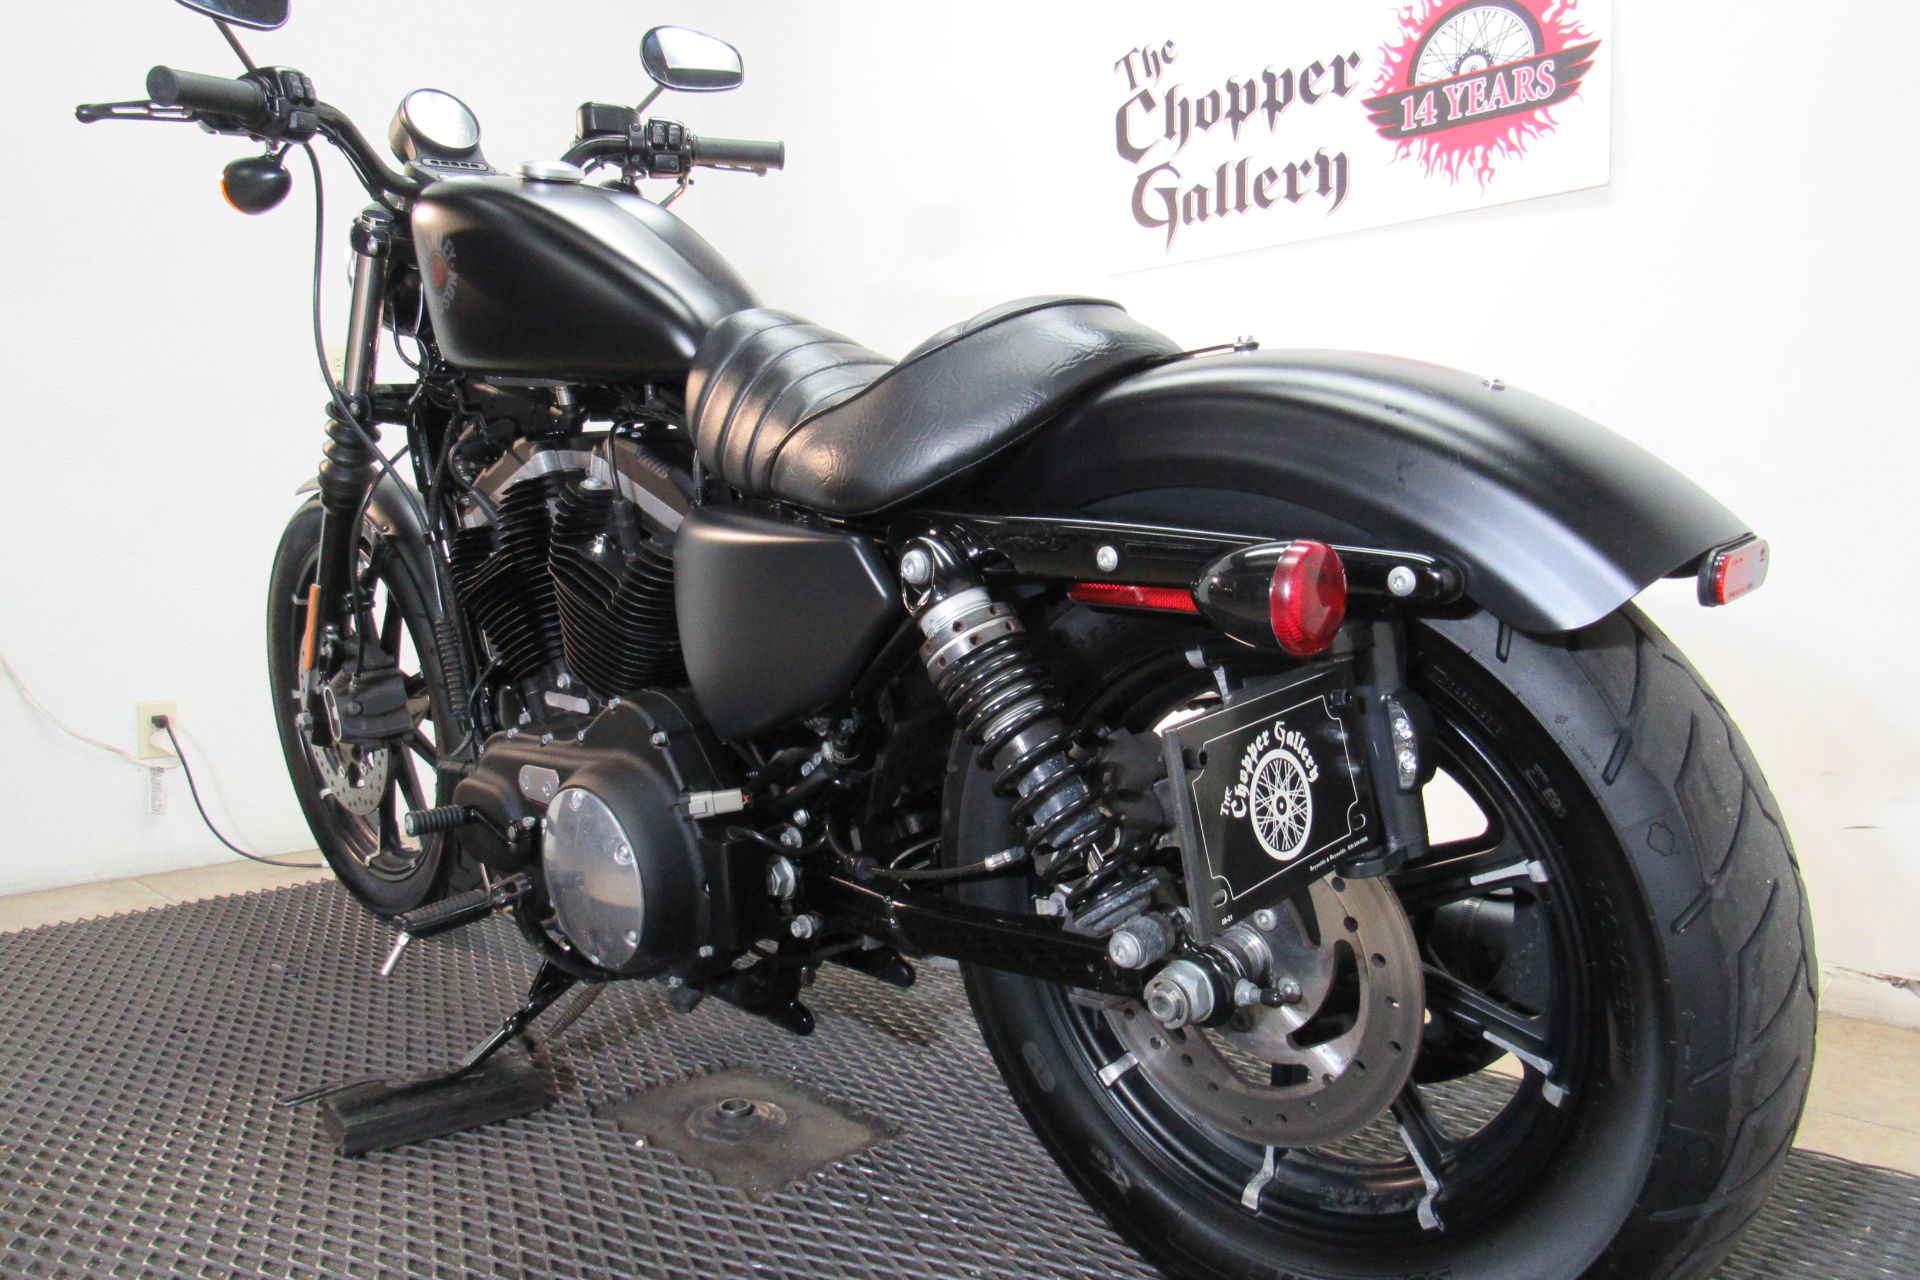 2020 Harley-Davidson Iron 883™ in Temecula, California - Photo 26